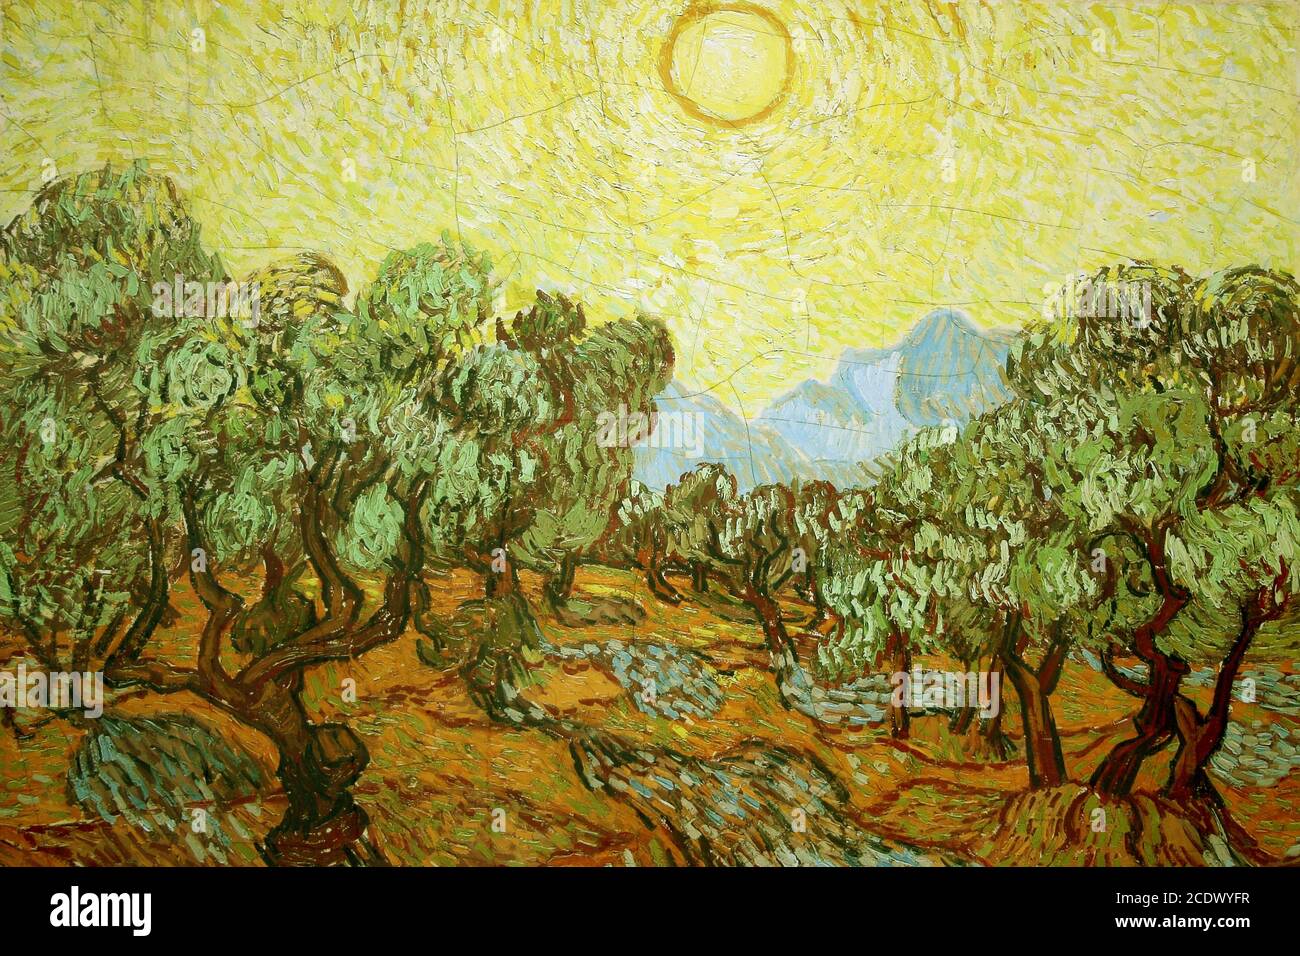 Van Gogh Olive grandissent avec le ciel jaune Banque D'Images